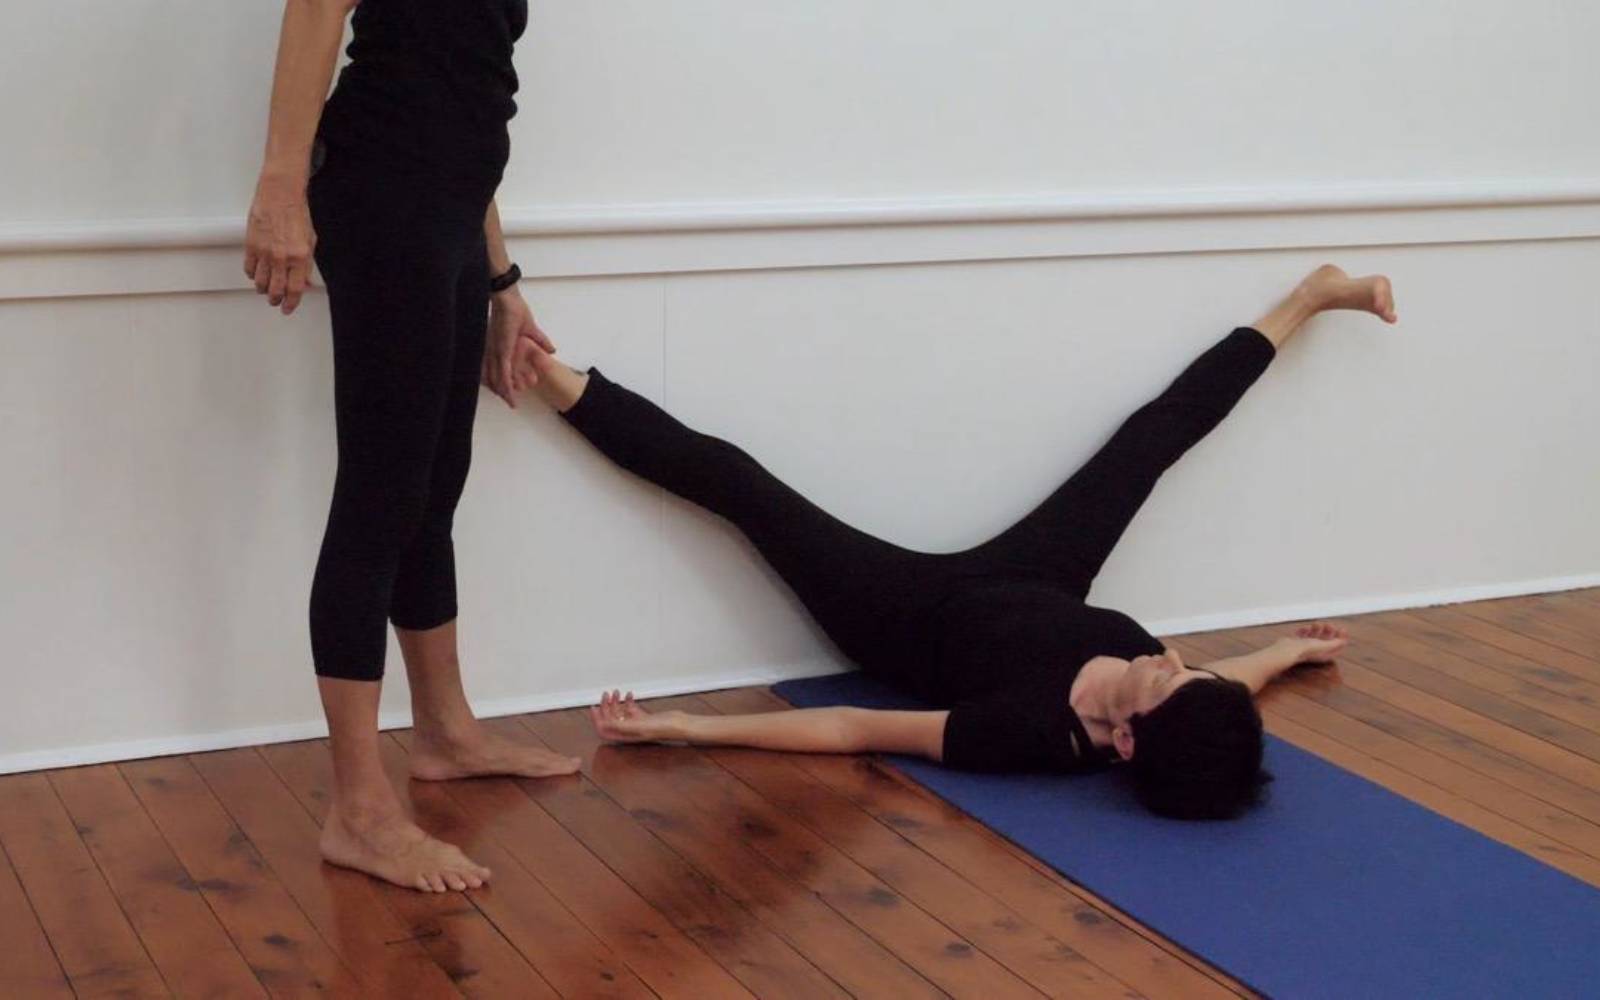 Cool yoga poses everyone should do - Mostly Amélie